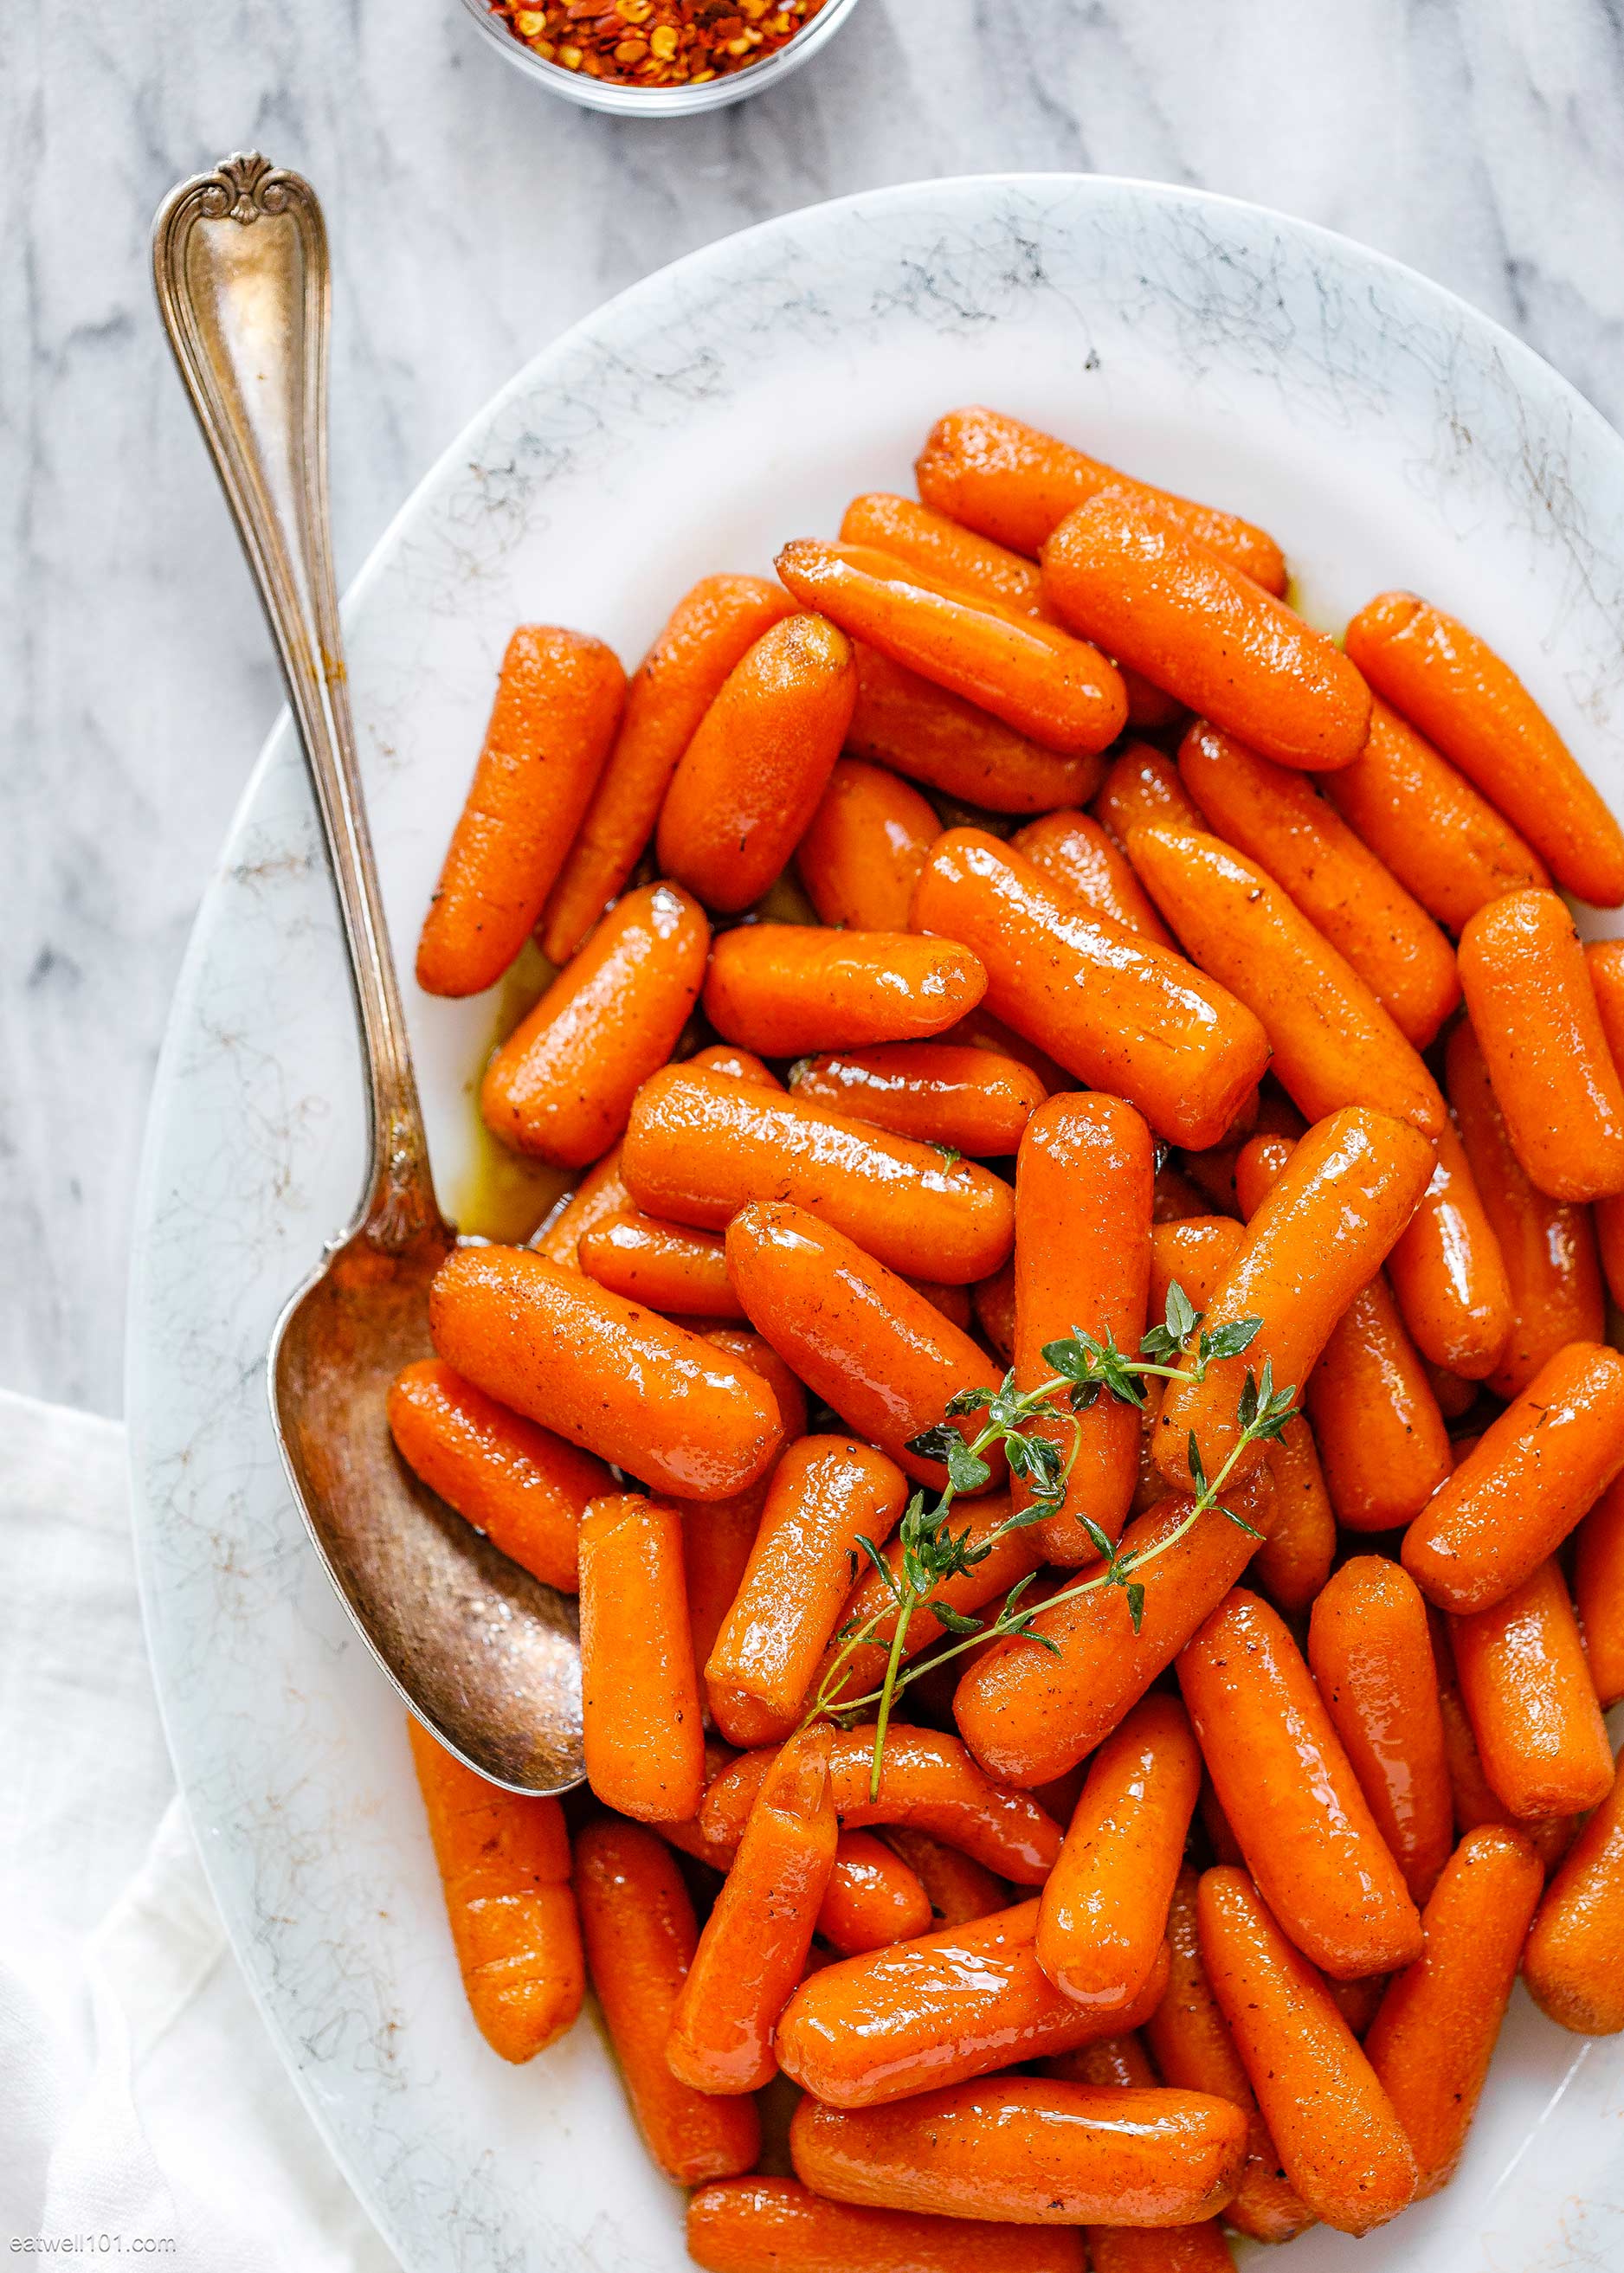 https://www.eatwell101.com/wp-content/uploads/2020/11/Slow-Cooker-Carrots-recipe.jpg